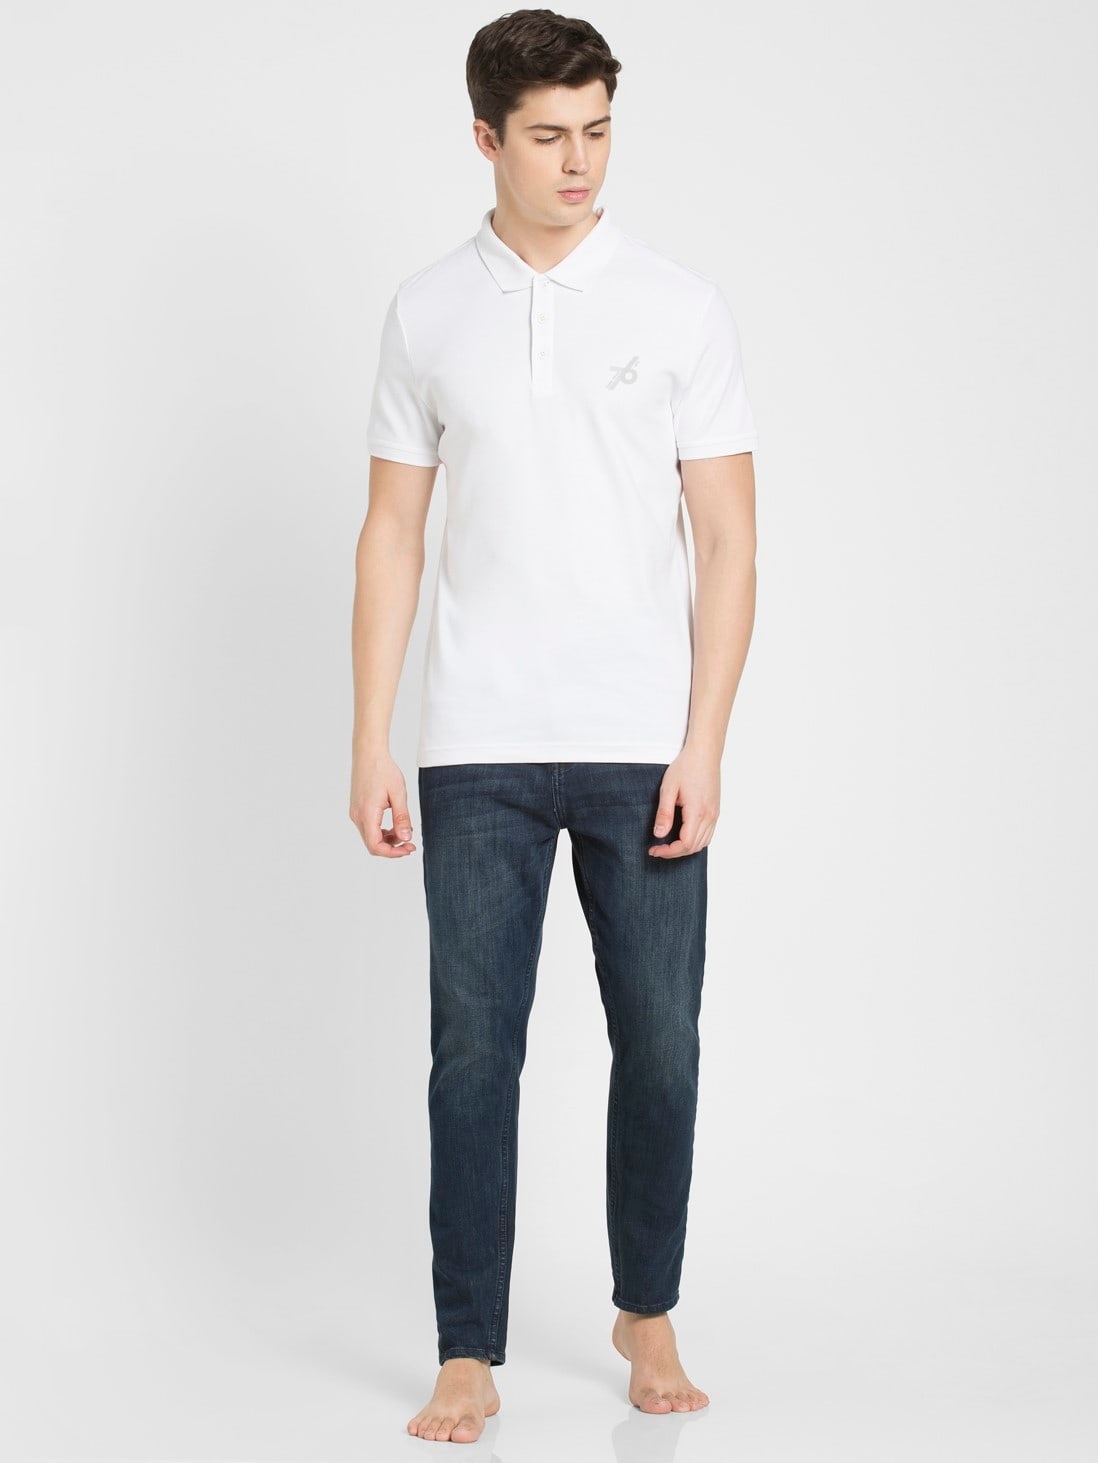 White Solid Half Sleeve Polo Sports T-Shirt for Men 3911 | Jockey India